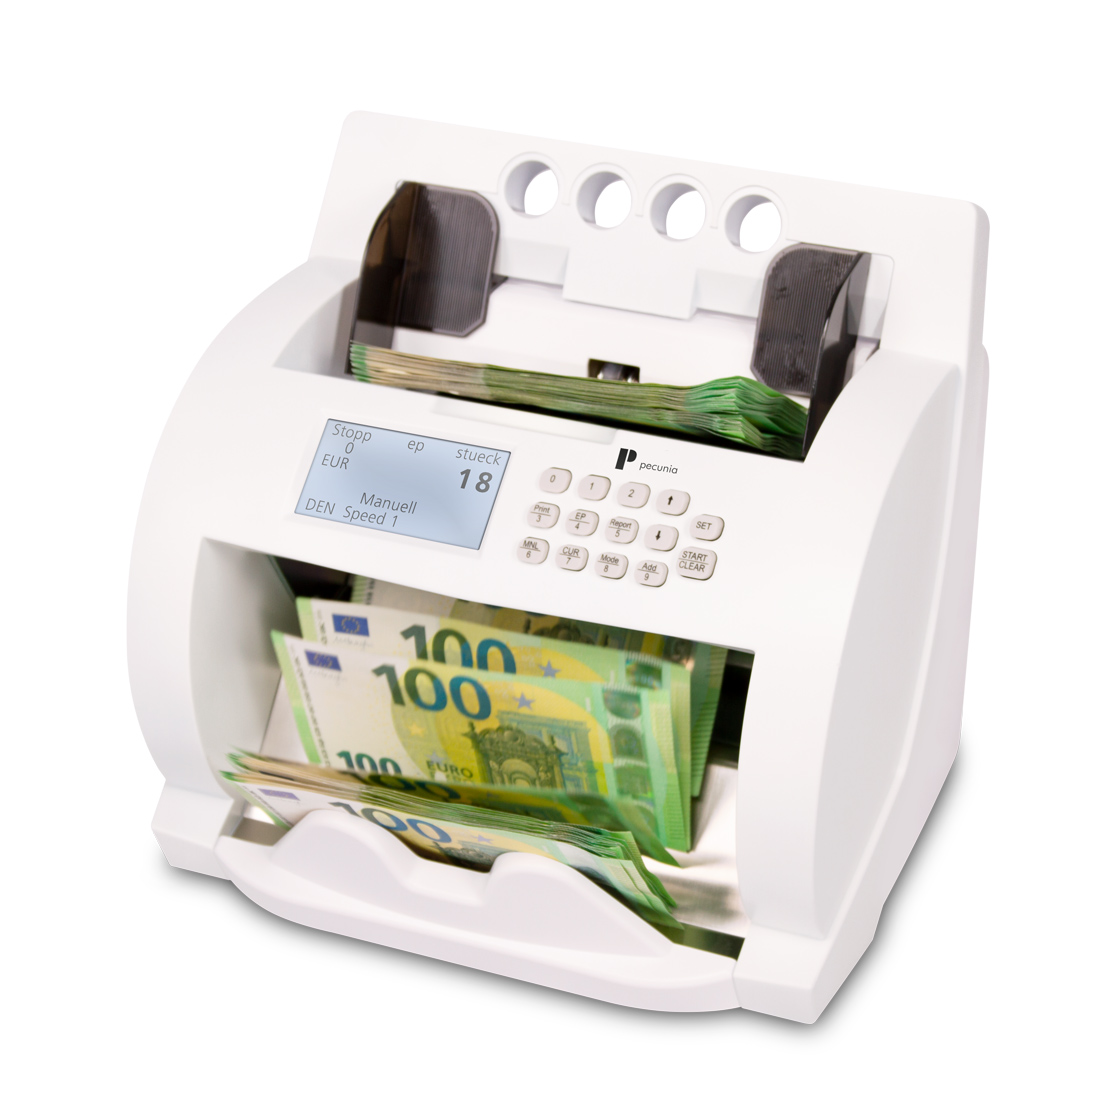 Banknotenzähler Pecunia PC 900 SE4